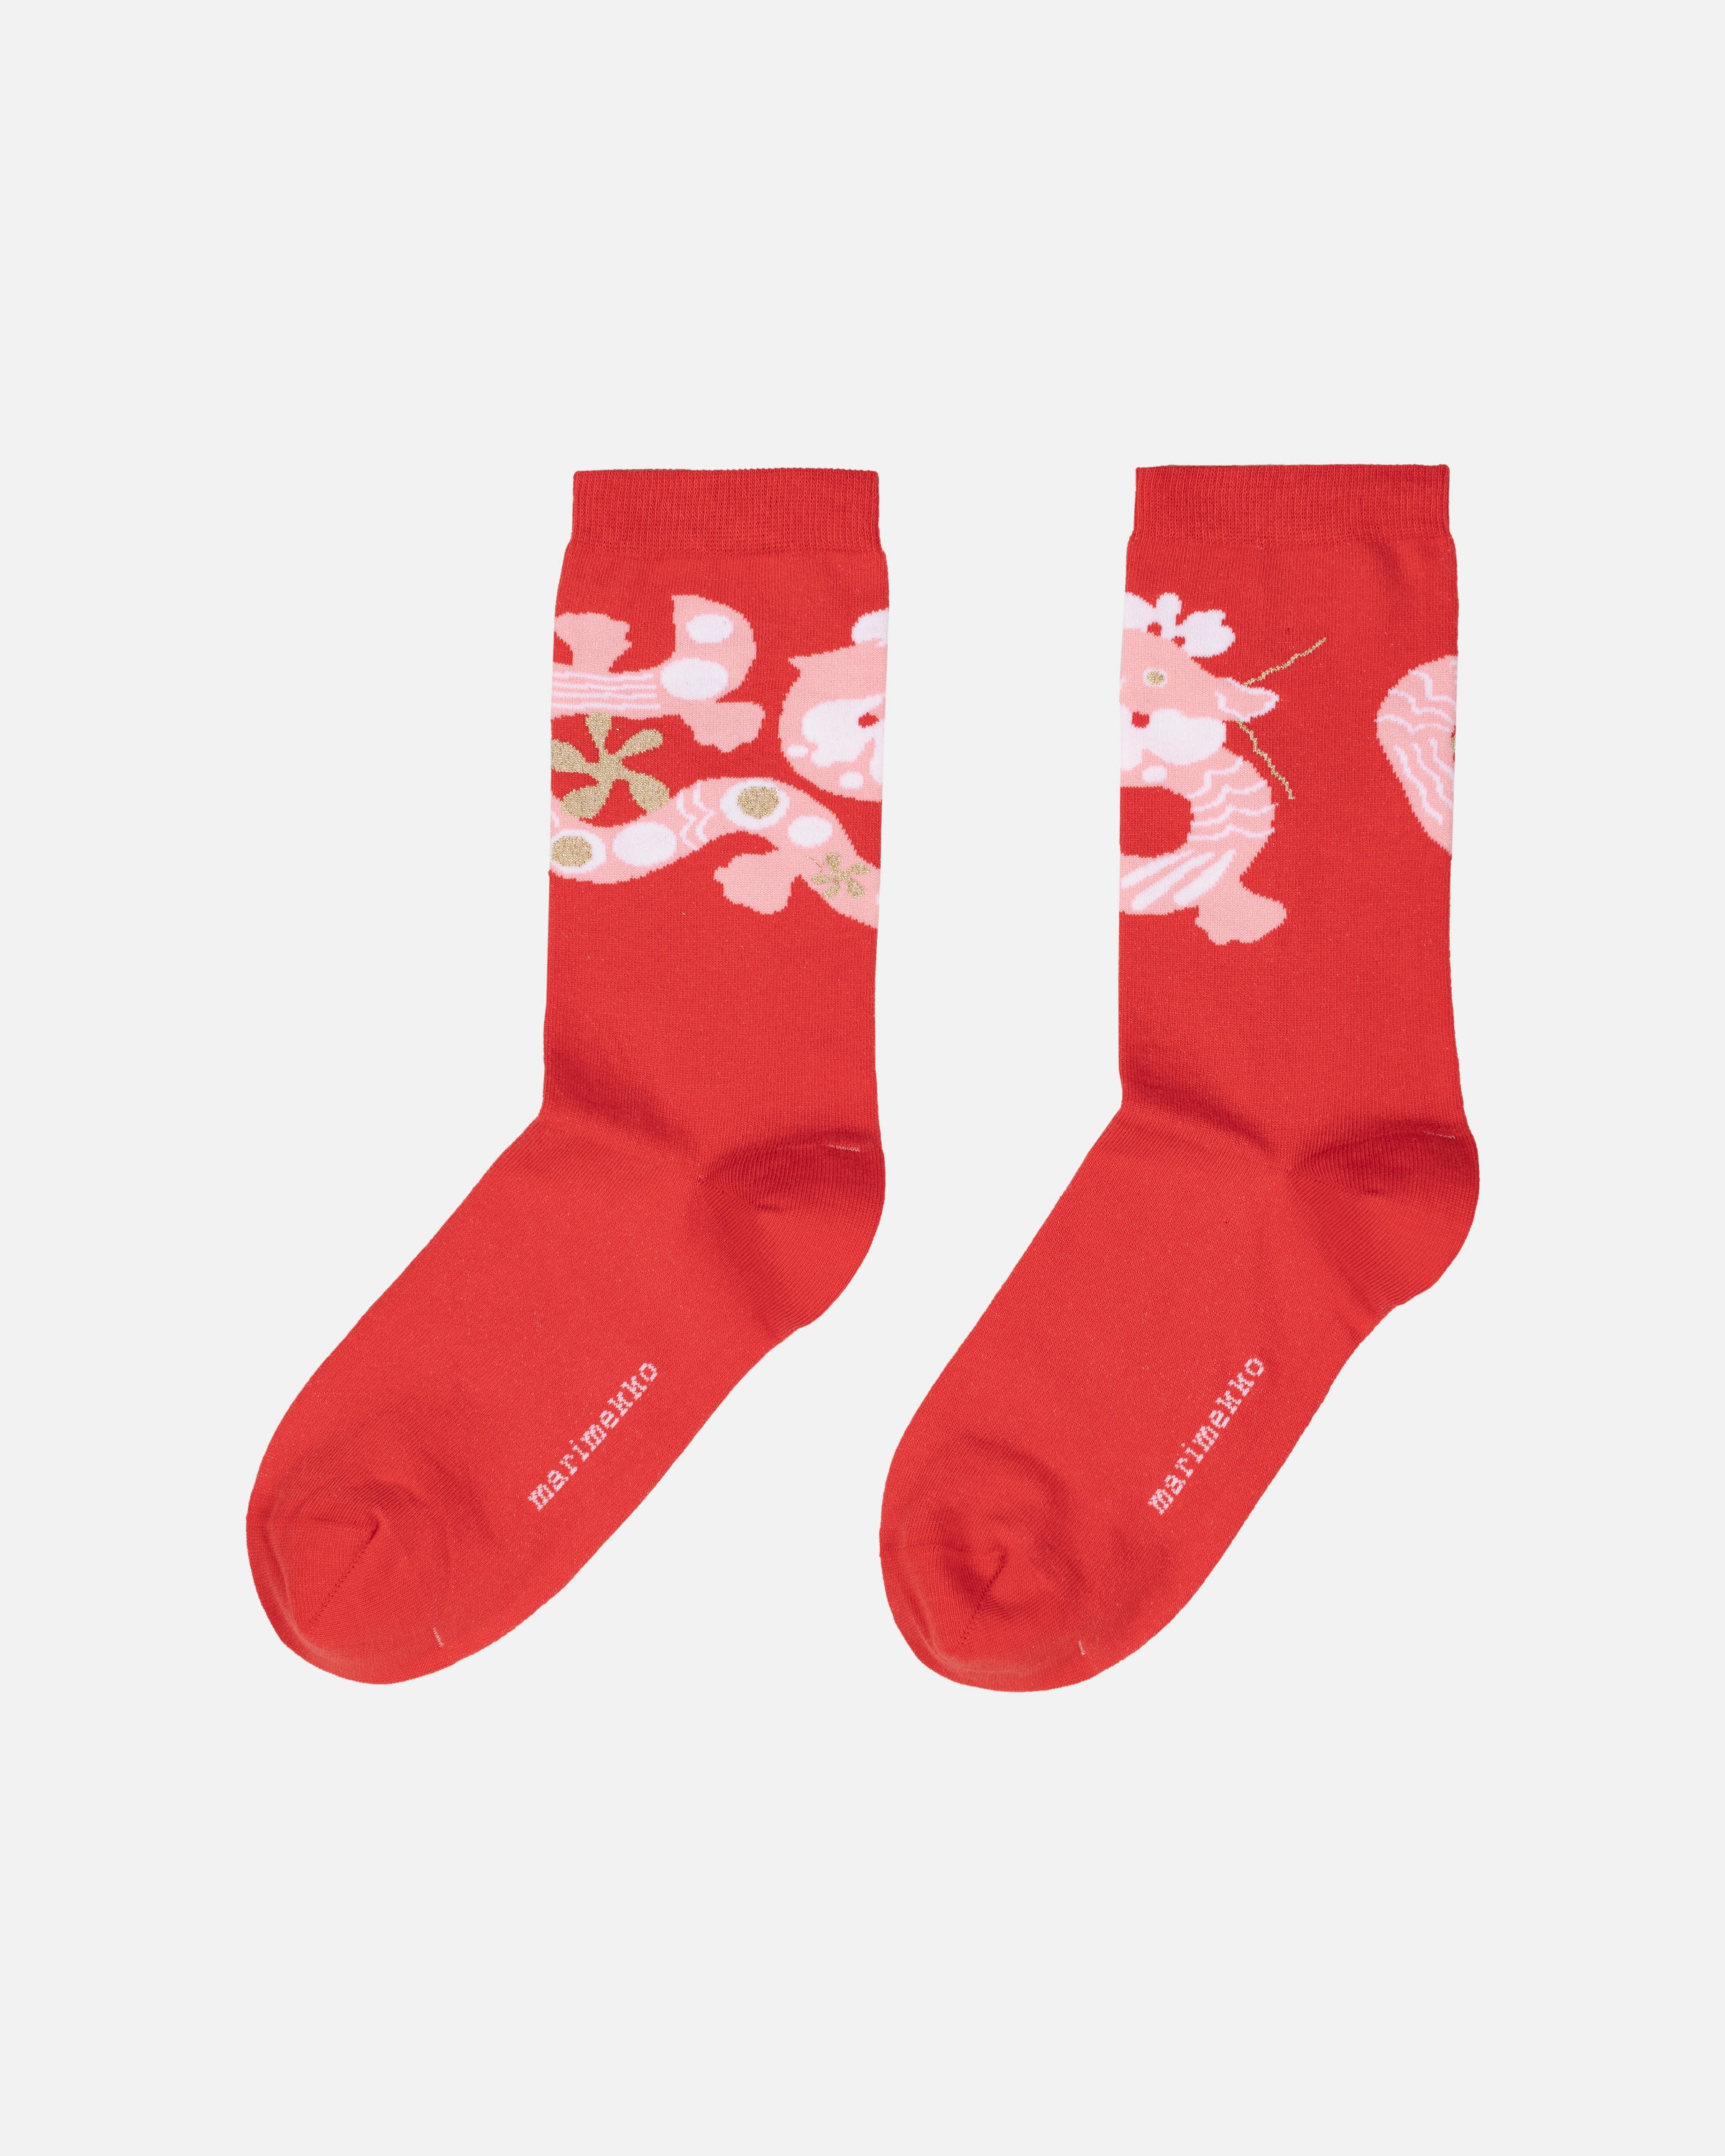 Chinese New Year Jalo Kasvaa Ankle Socks